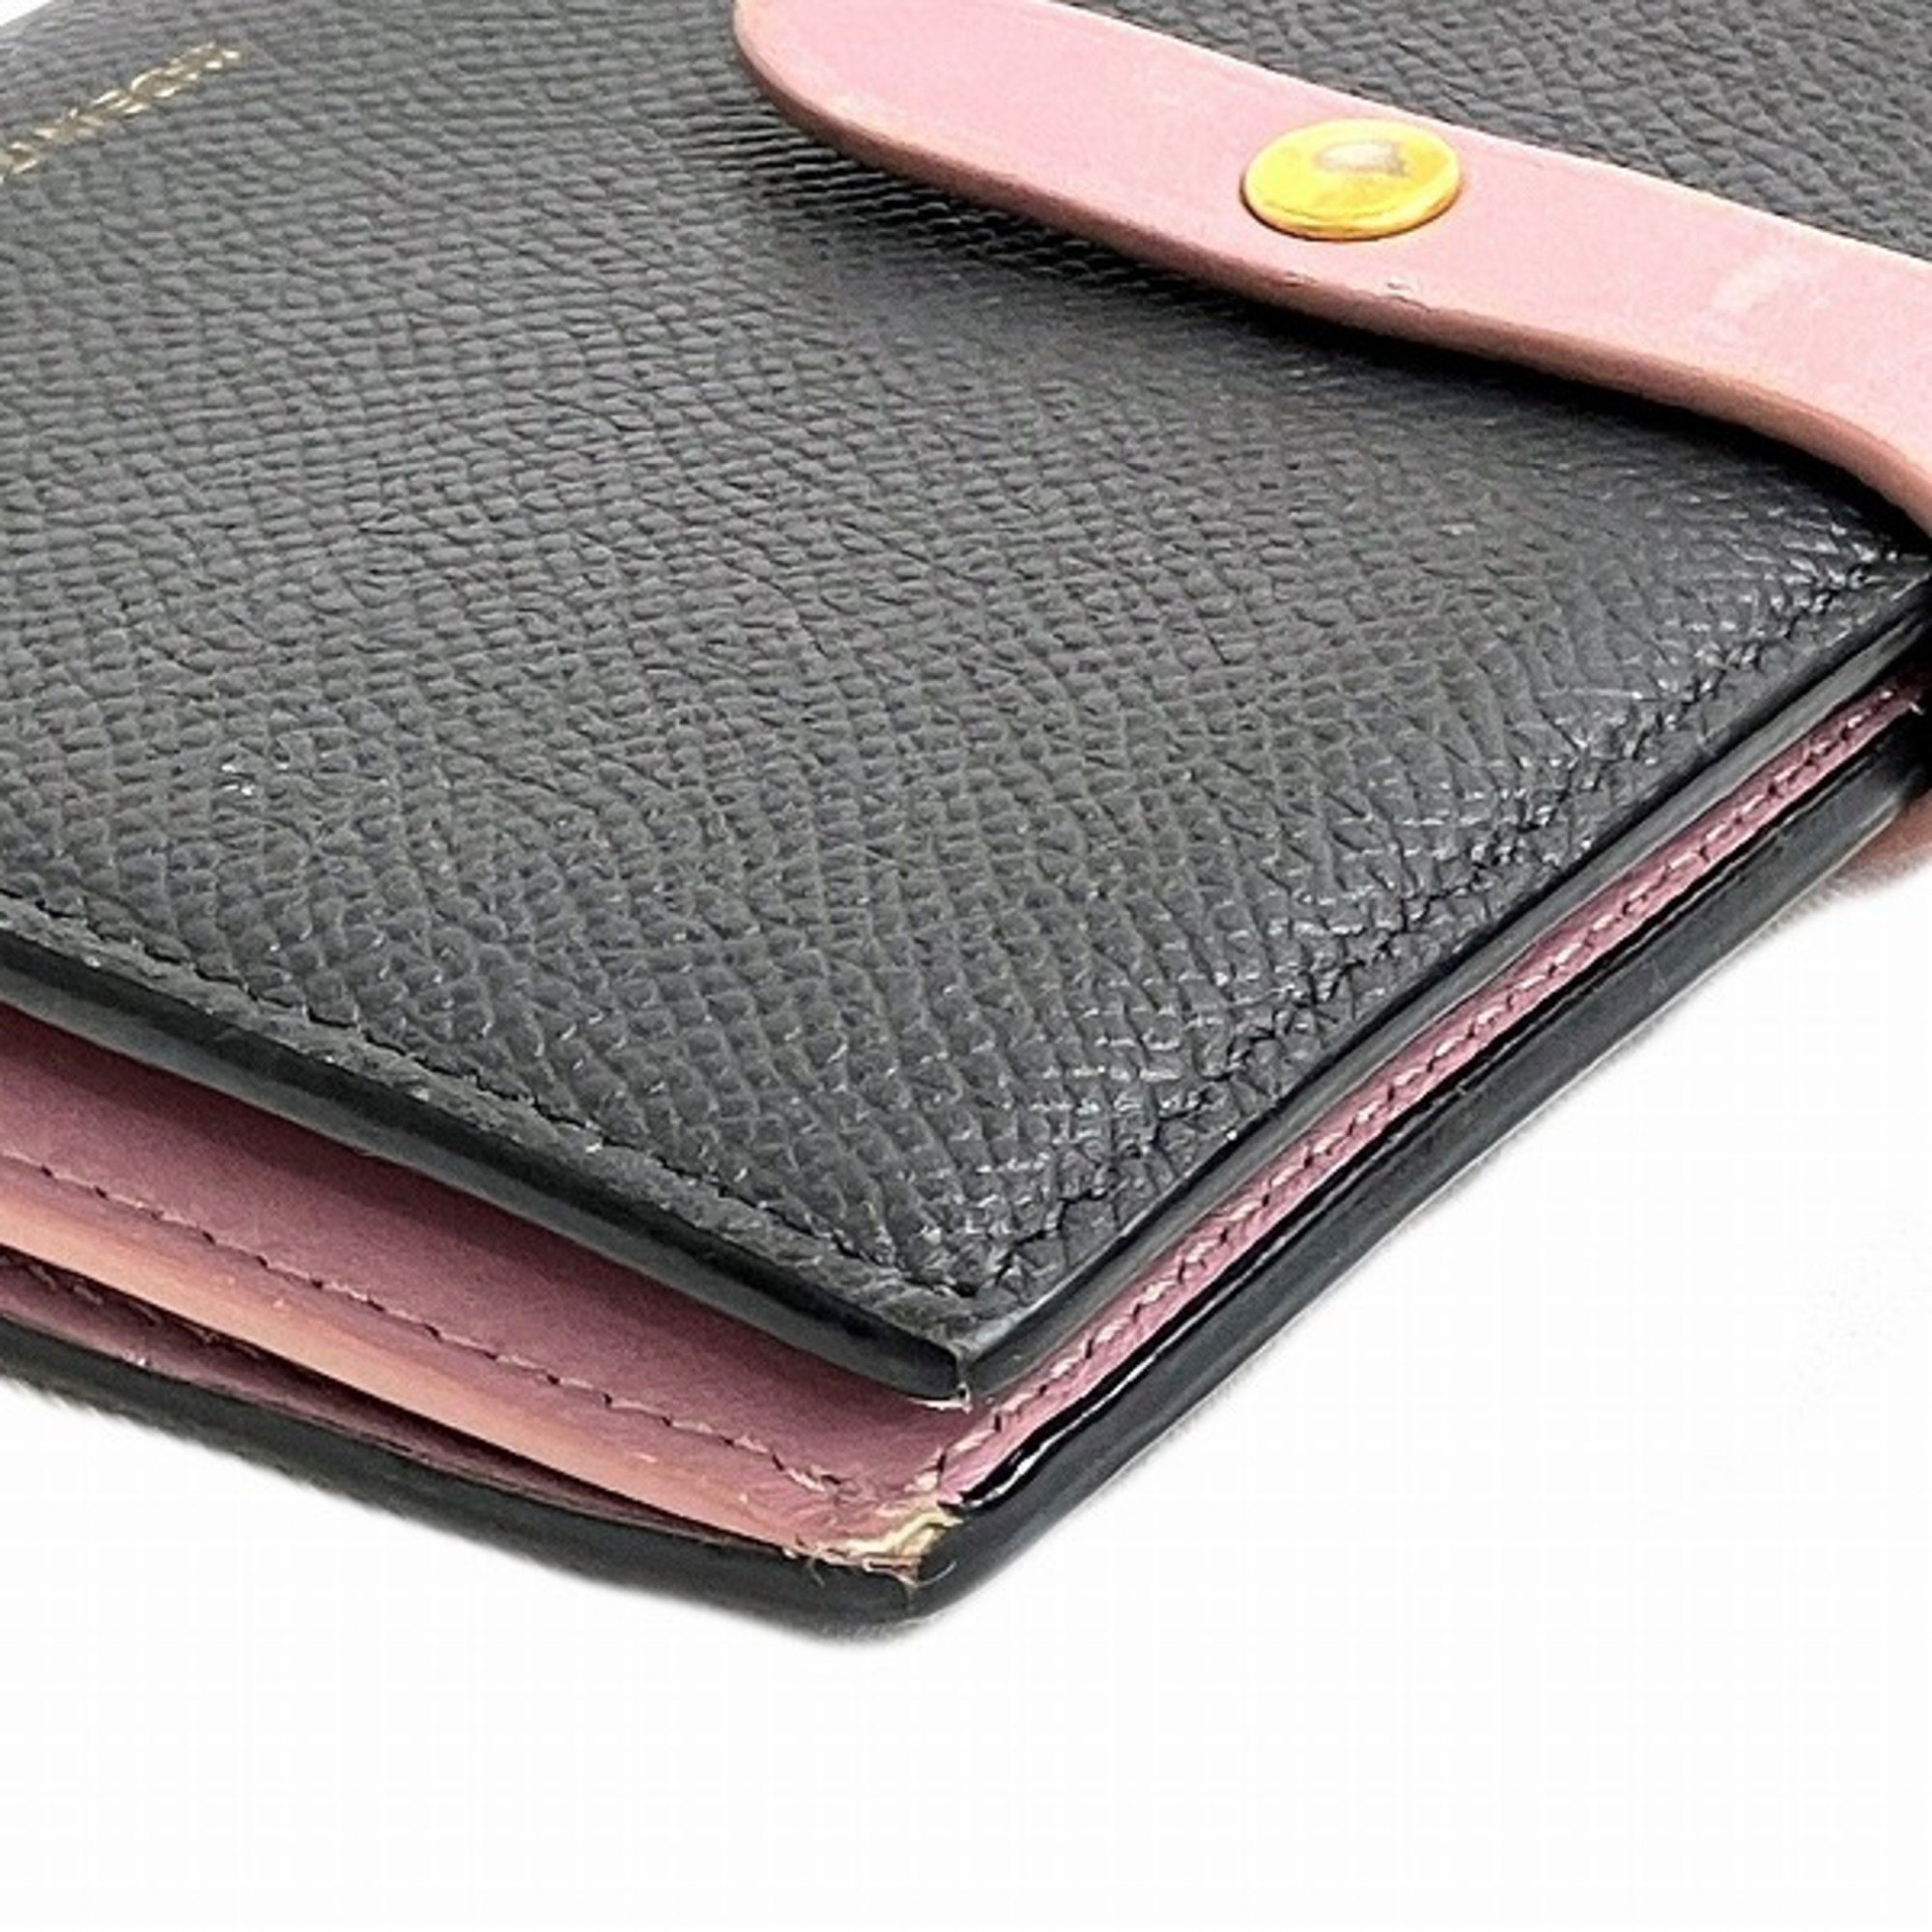 CELINE Bicolor Medium Strap Wallet Bifold Women's